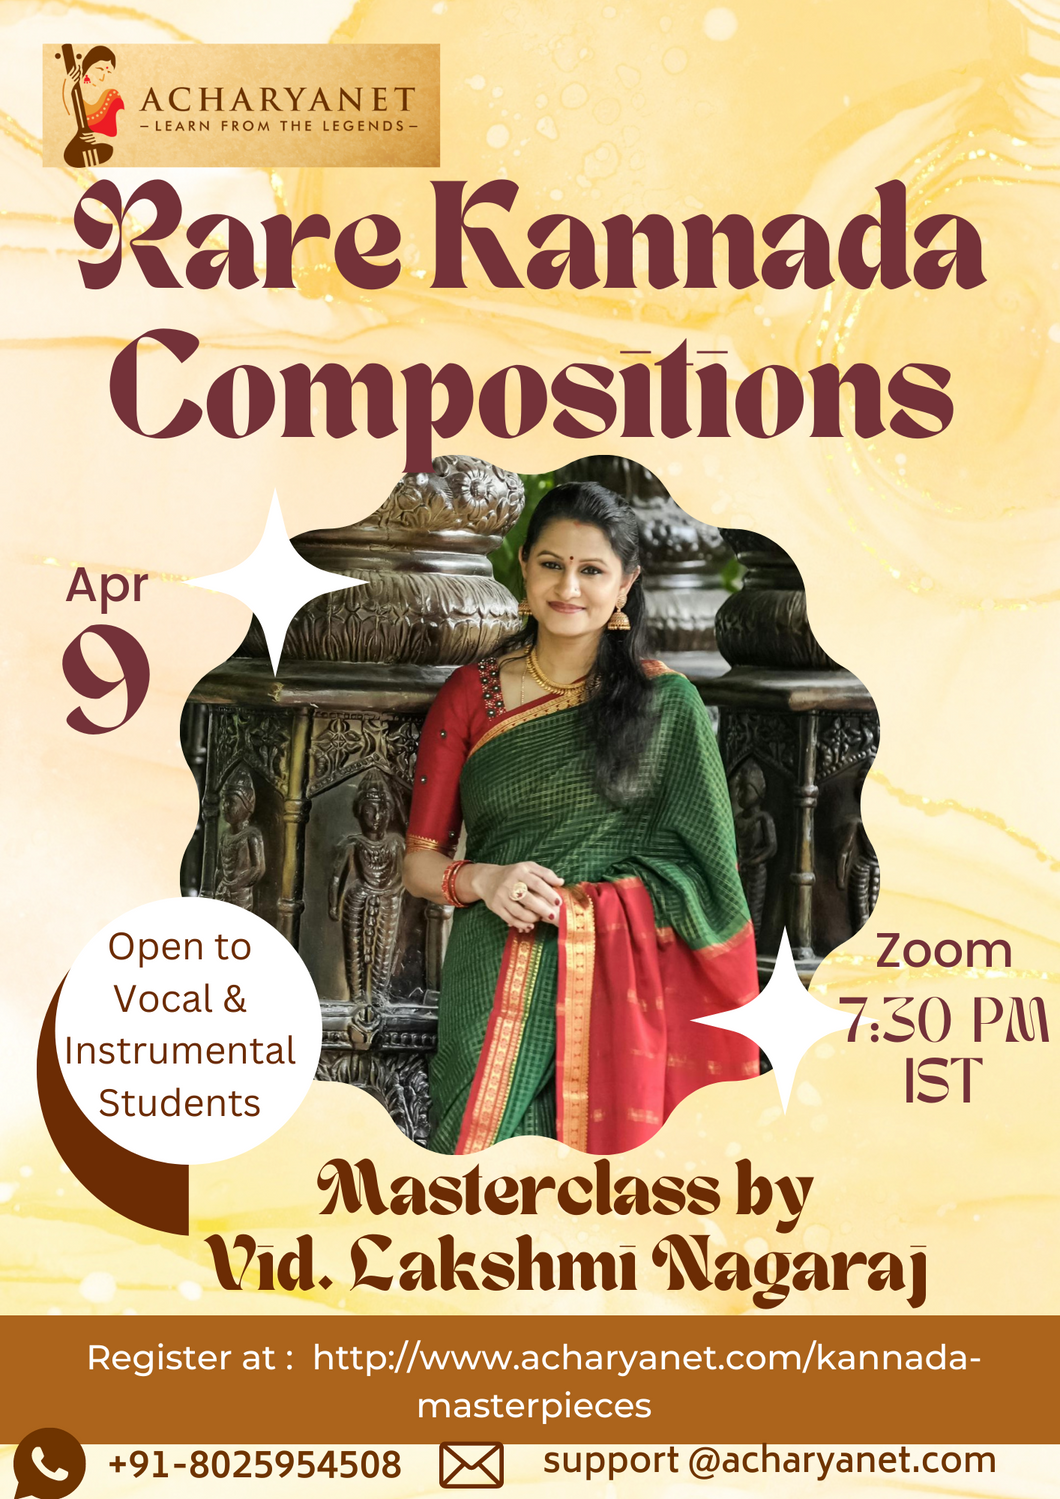 Masterclass on Rare Kannada Compositions by Vid. Lakshmi Nagaraj